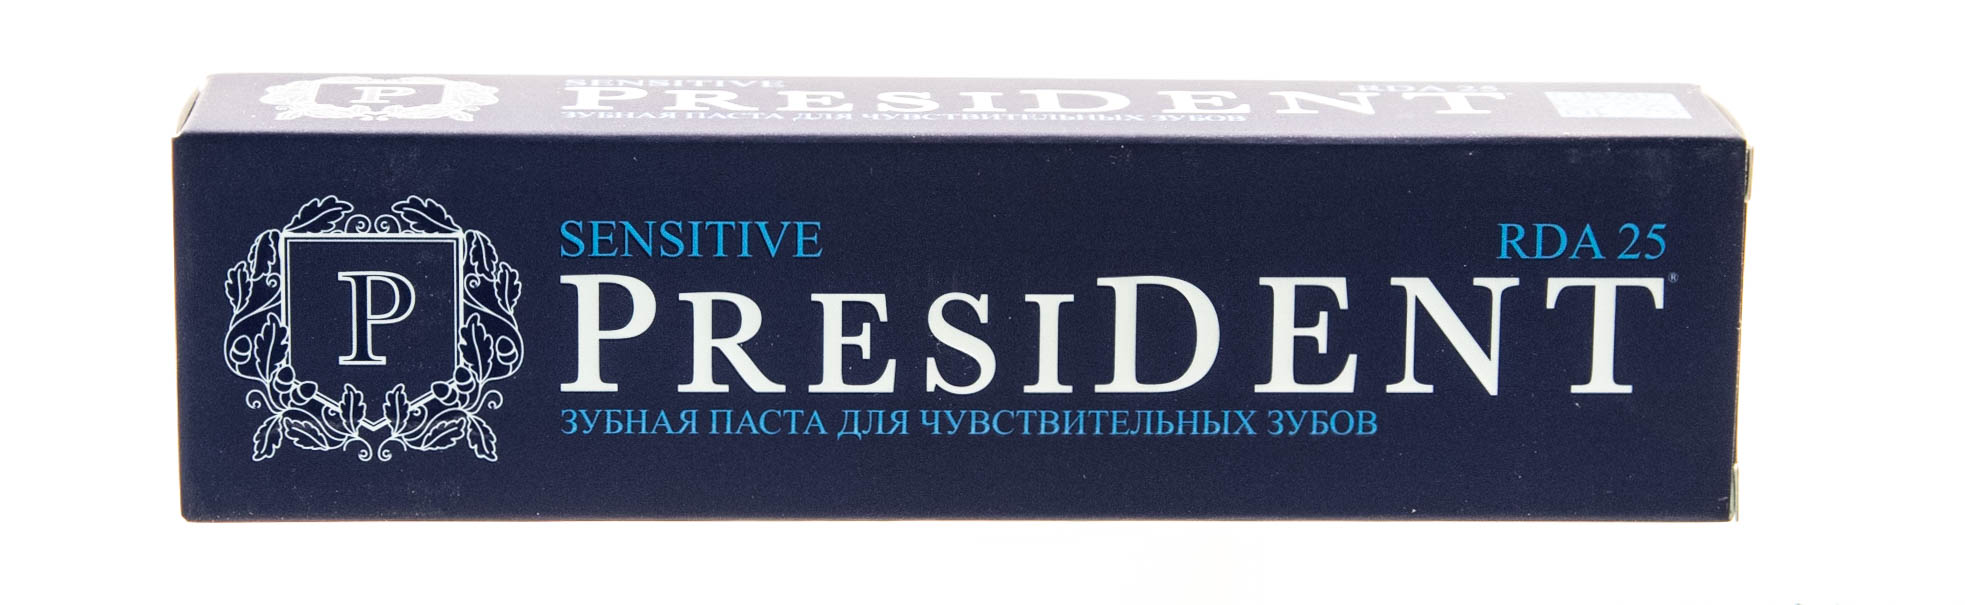 President Зубная паста для чувствительных зубов, 50 мл (Pres